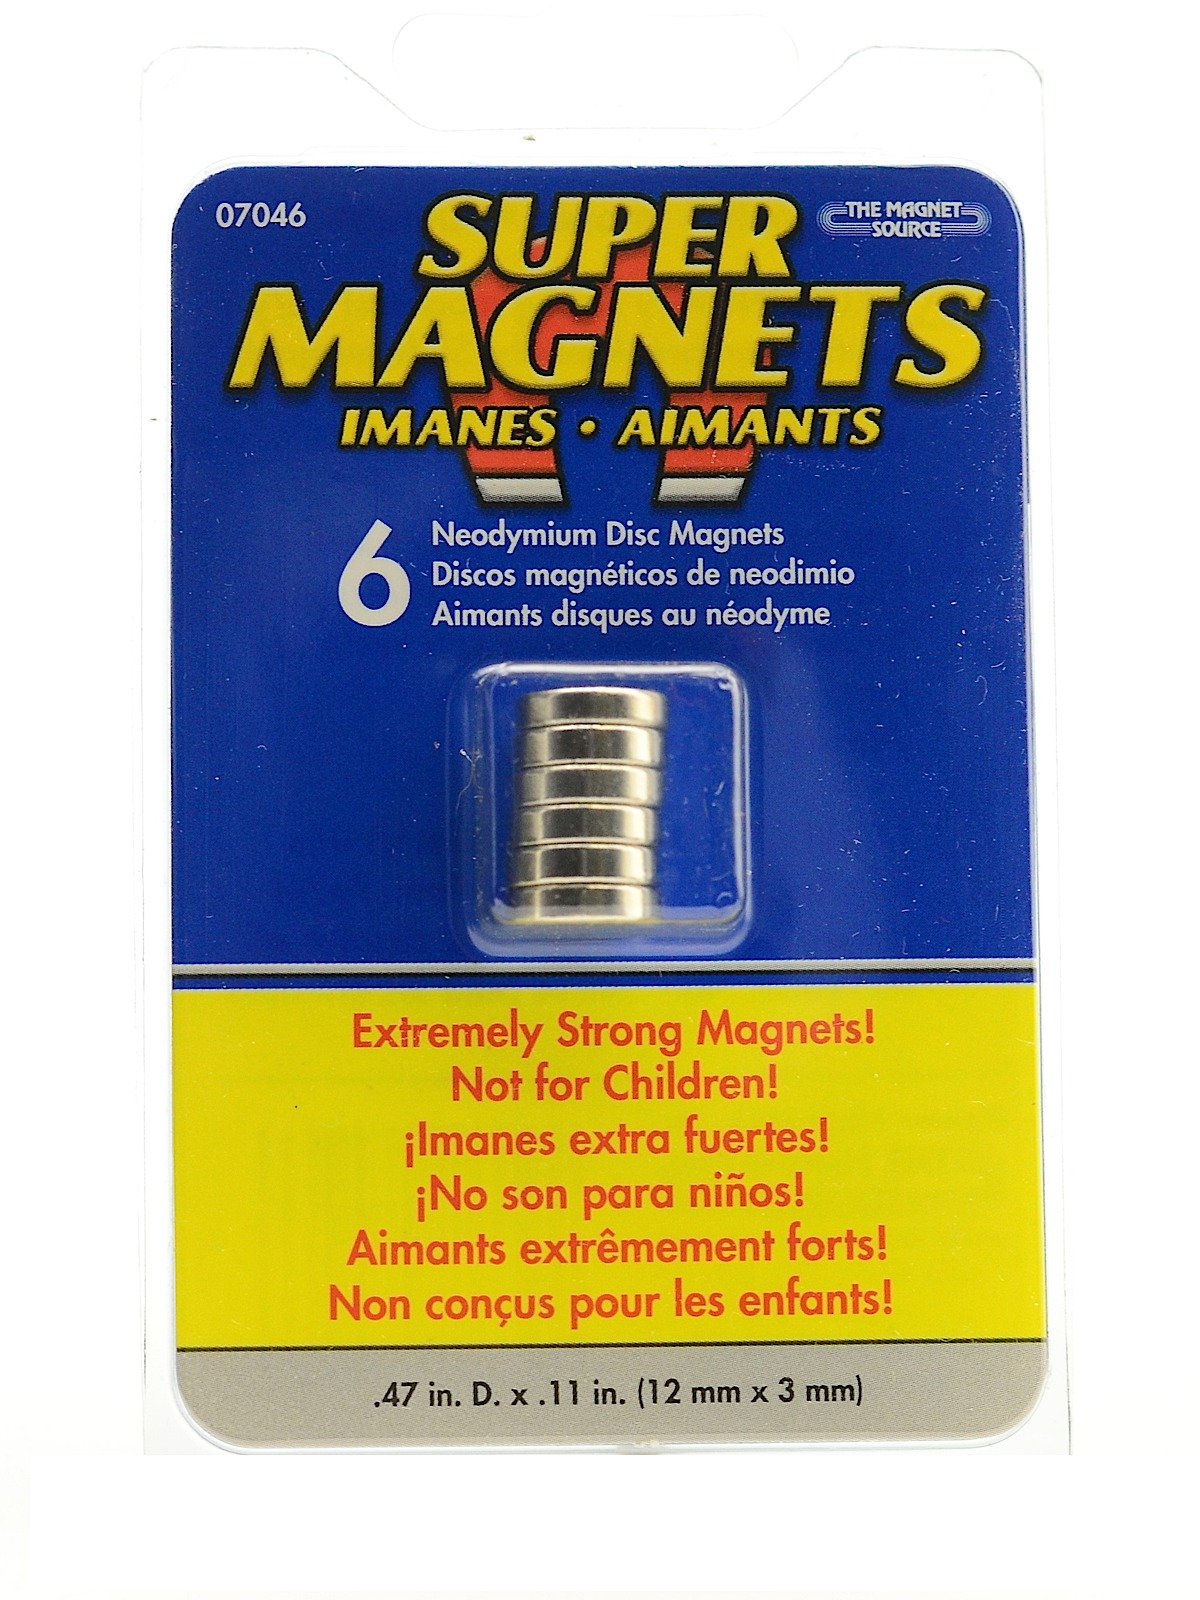 The Magnet Source - Super Magnets